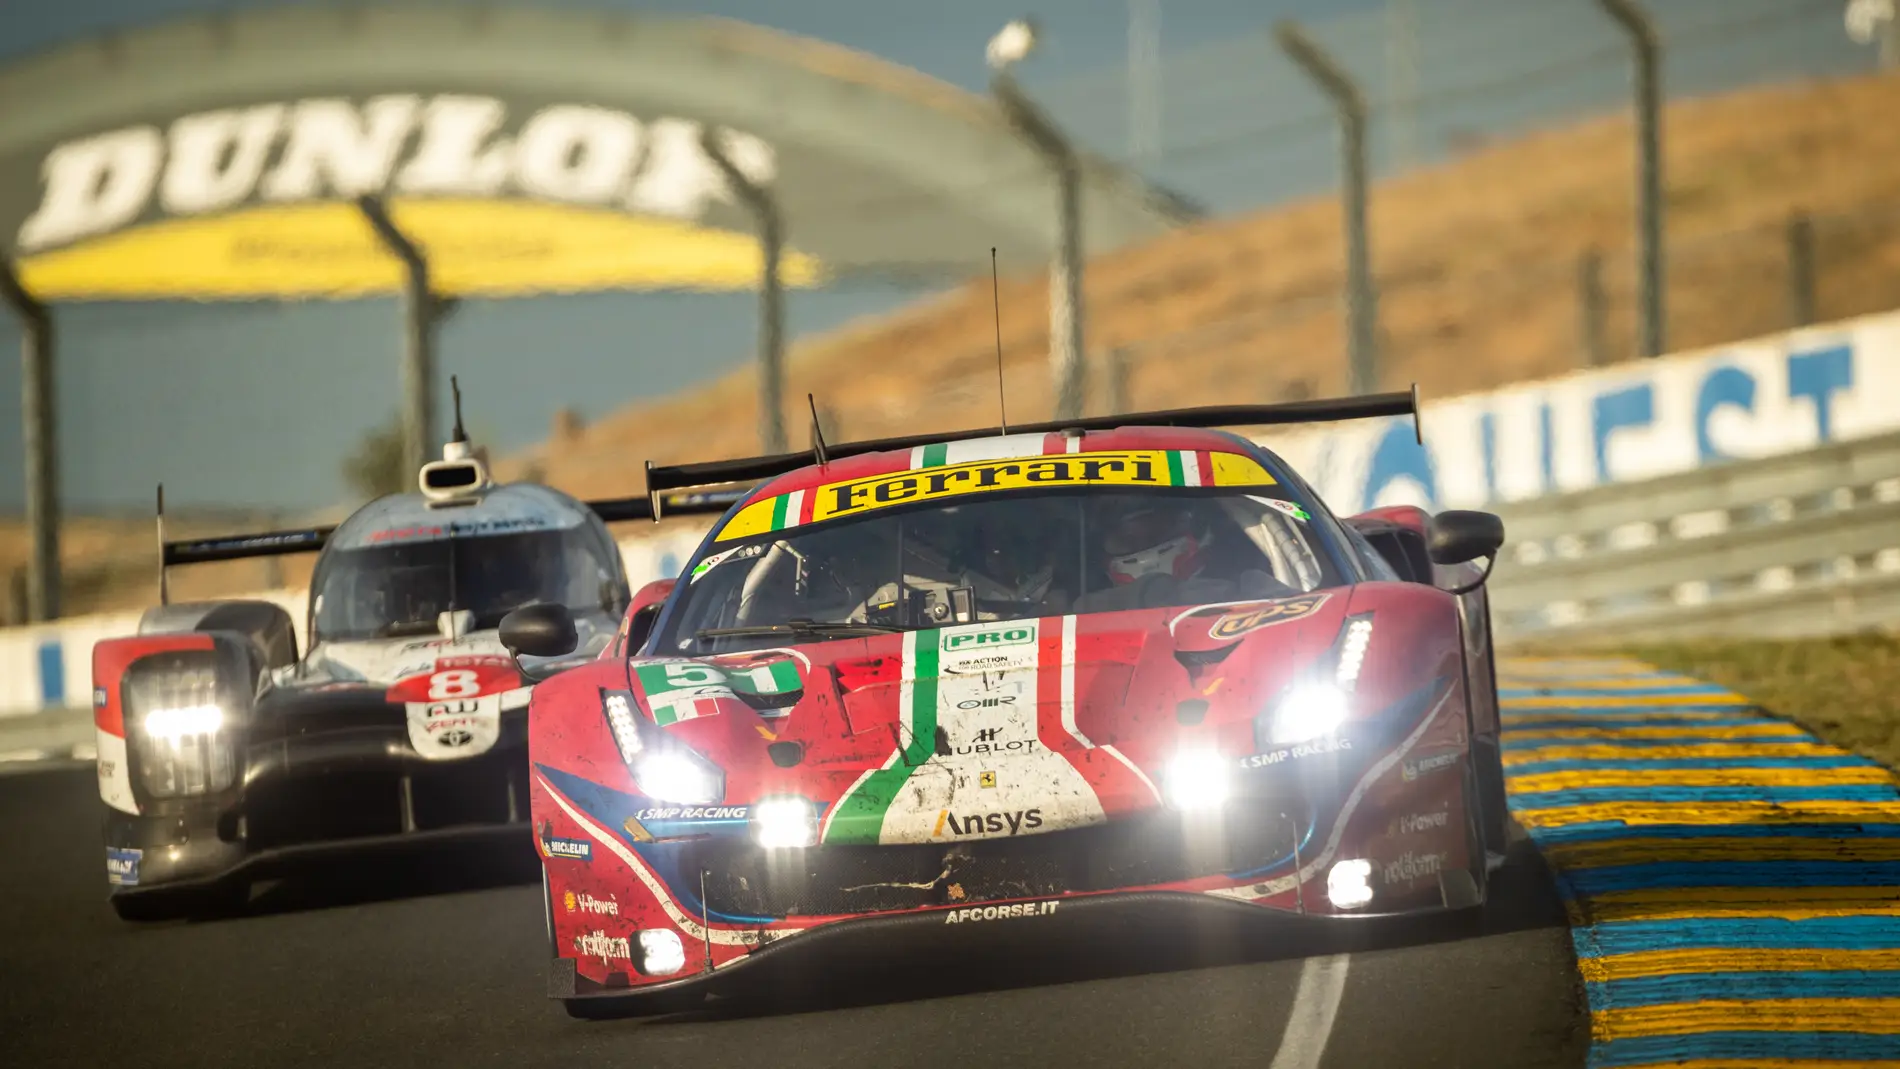  Ferrari confirma su regreso a la clase reina de Le Mans  